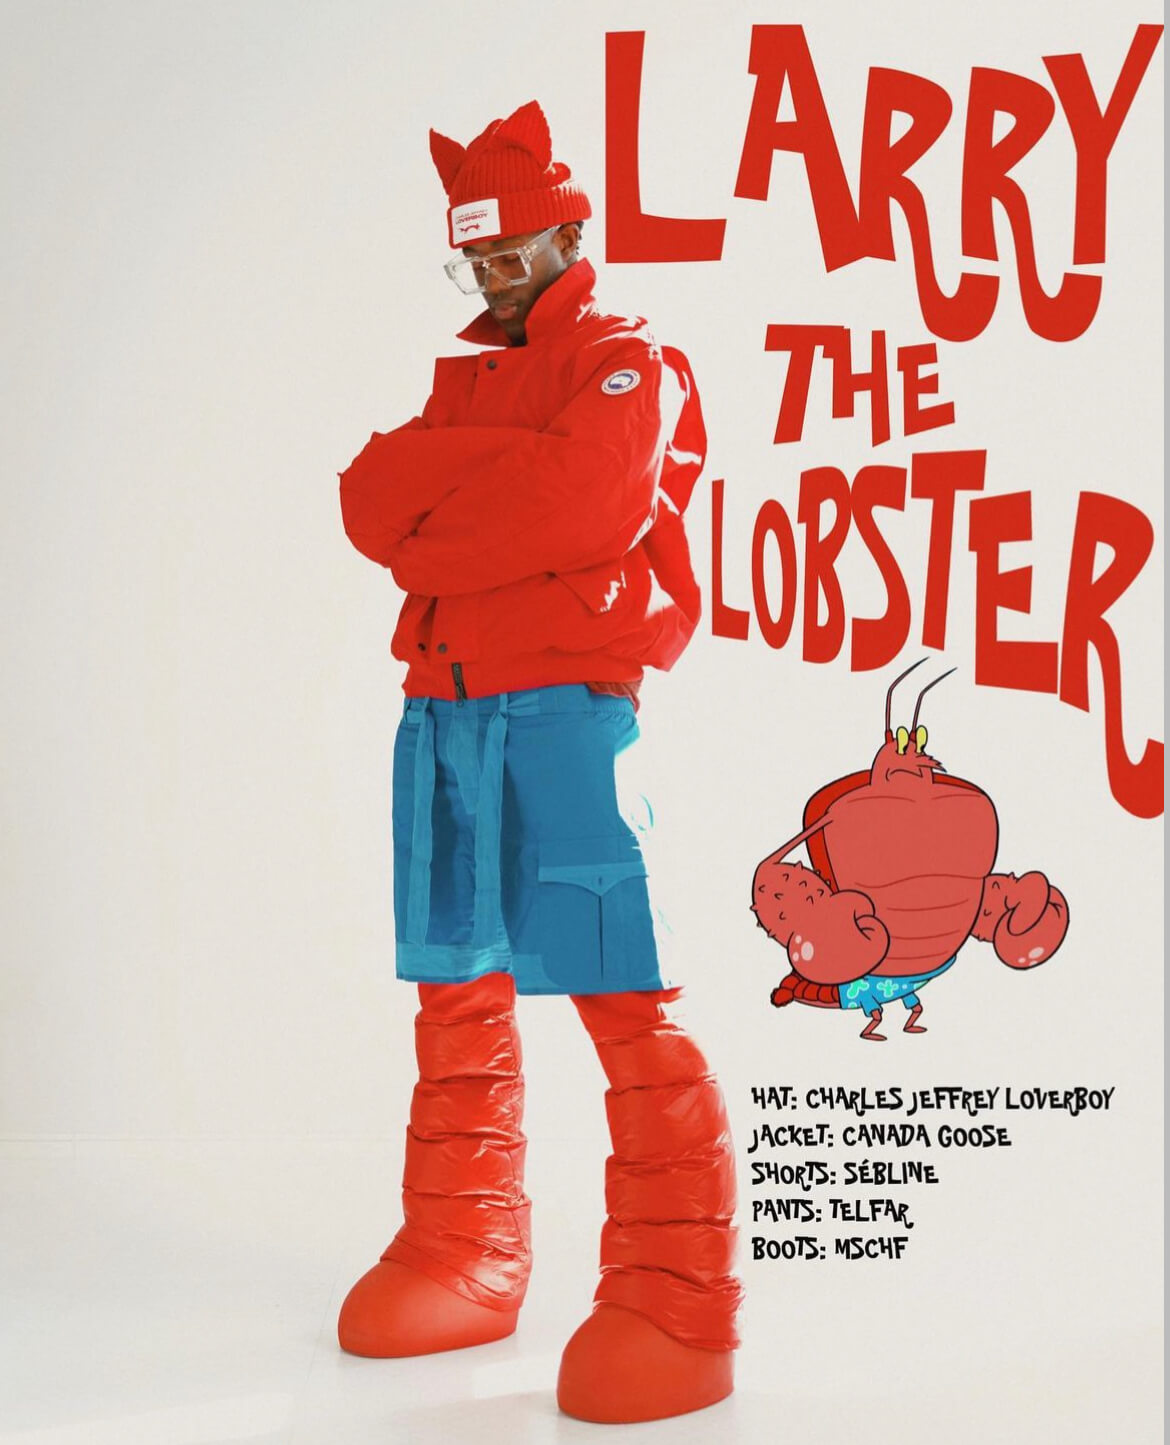 Wisdom Kaye as Larry The Lobster/Photo via Instagram @wisdm